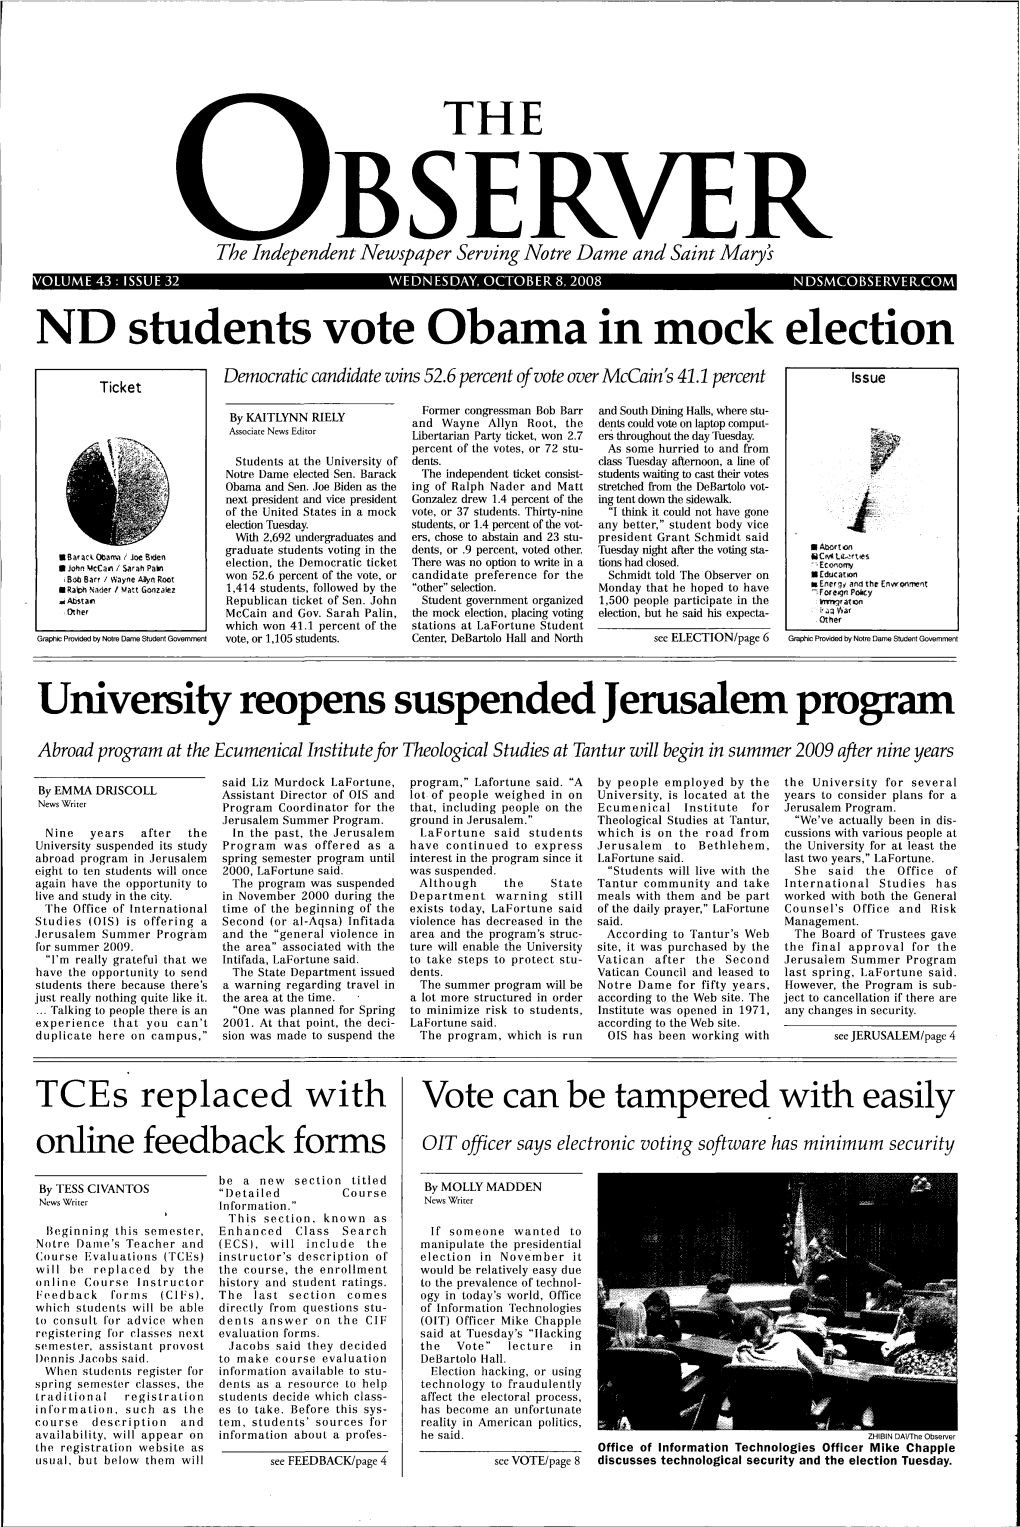 ND Students Vote Obama in Mock Election